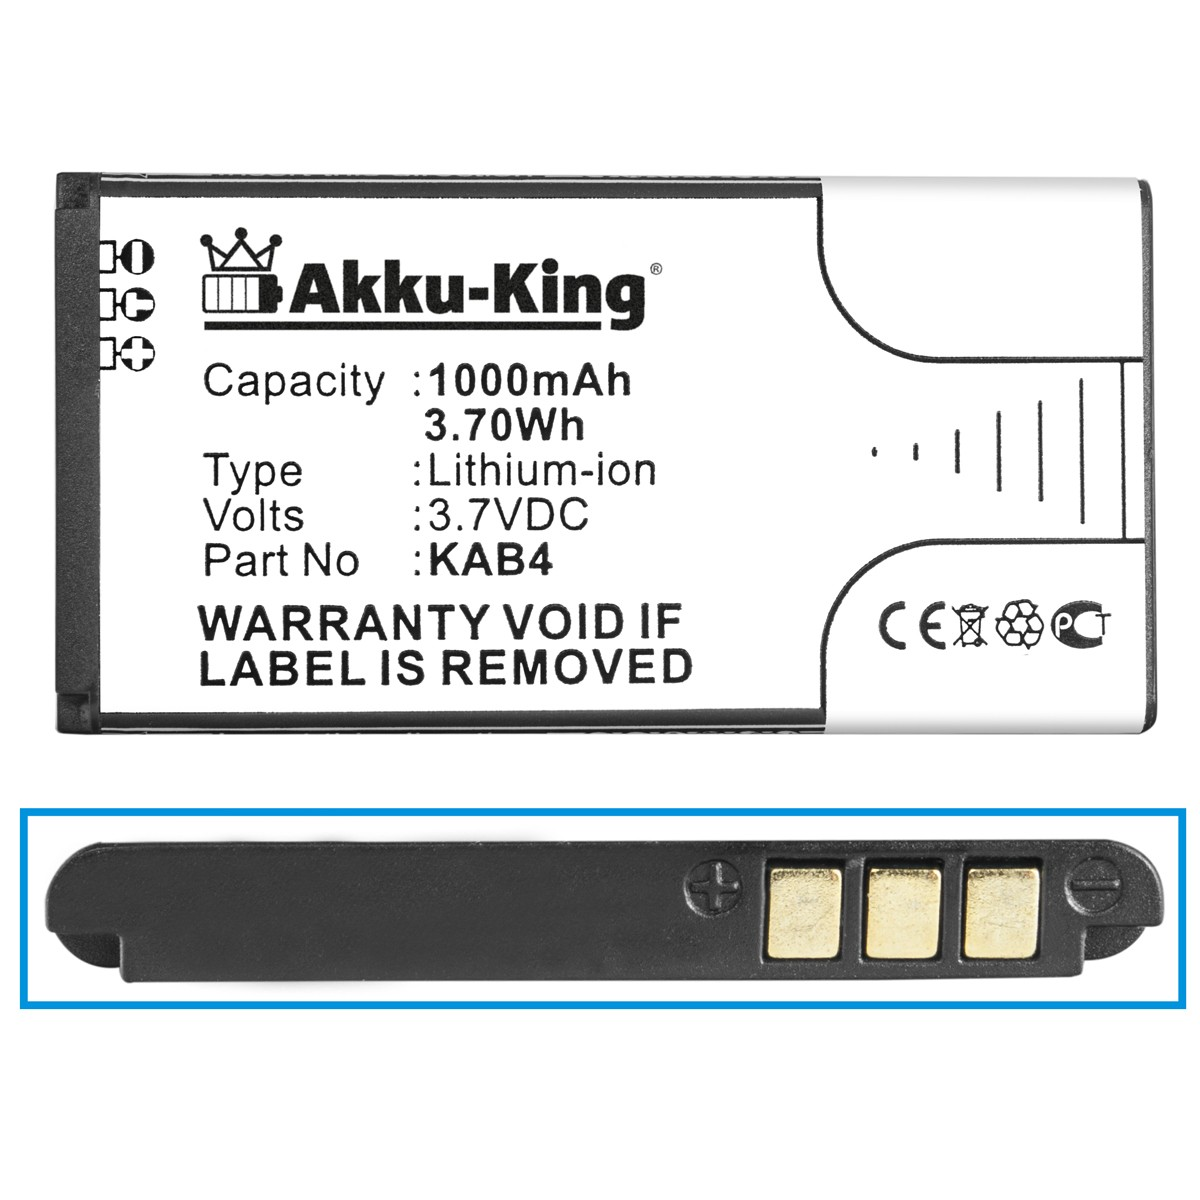 AKKU-KING Akku Kazam KAB4 kompatibel Handy-Akku, Li-Ion Volt, 3.7 mit 1000mAh